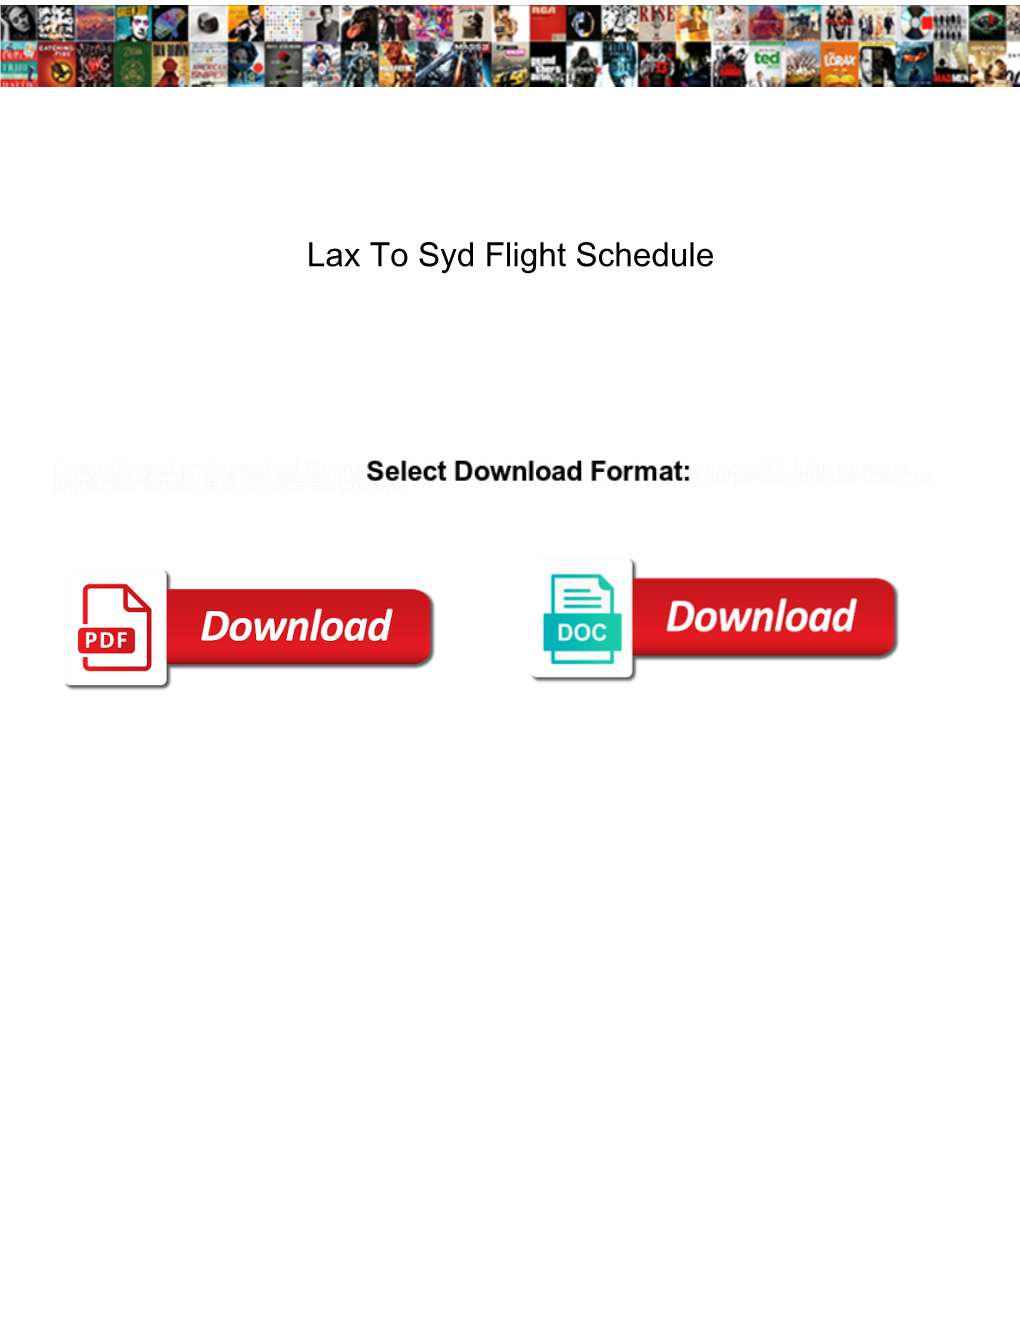 Lax to Syd Flight Schedule